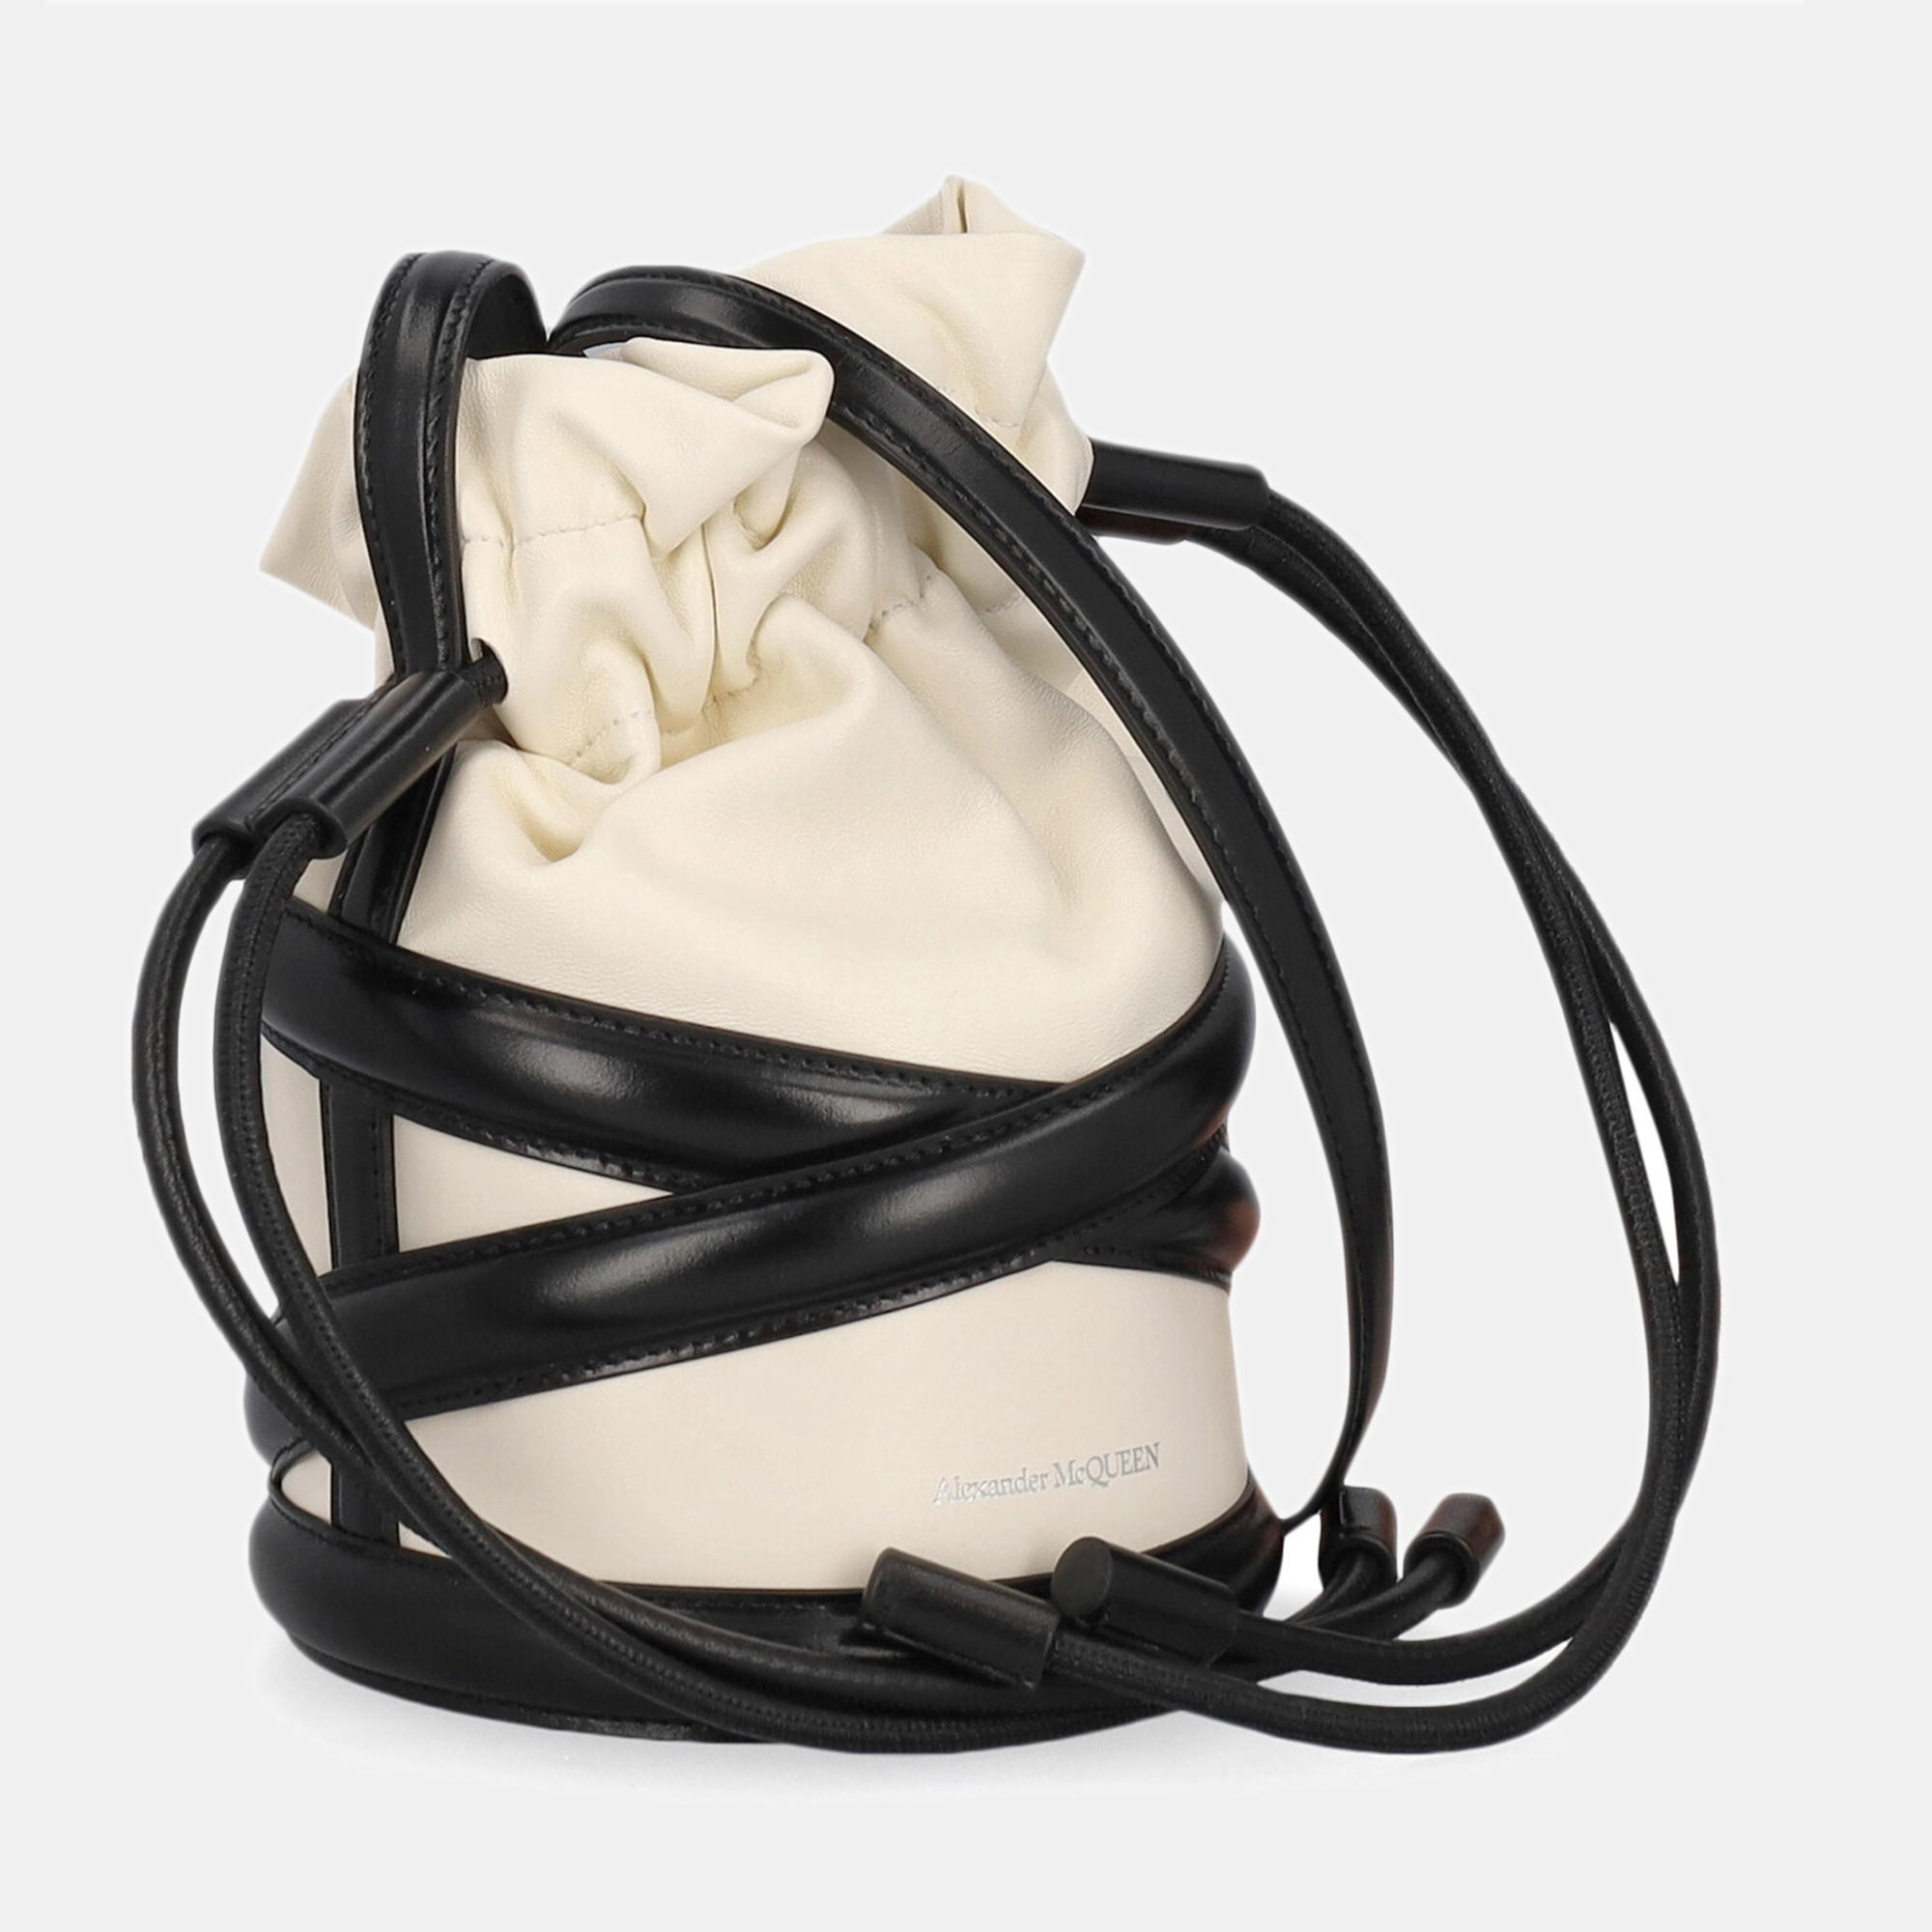 Alexander Mcqueen  Women's Leather Cross Body Bag - Black - One Size